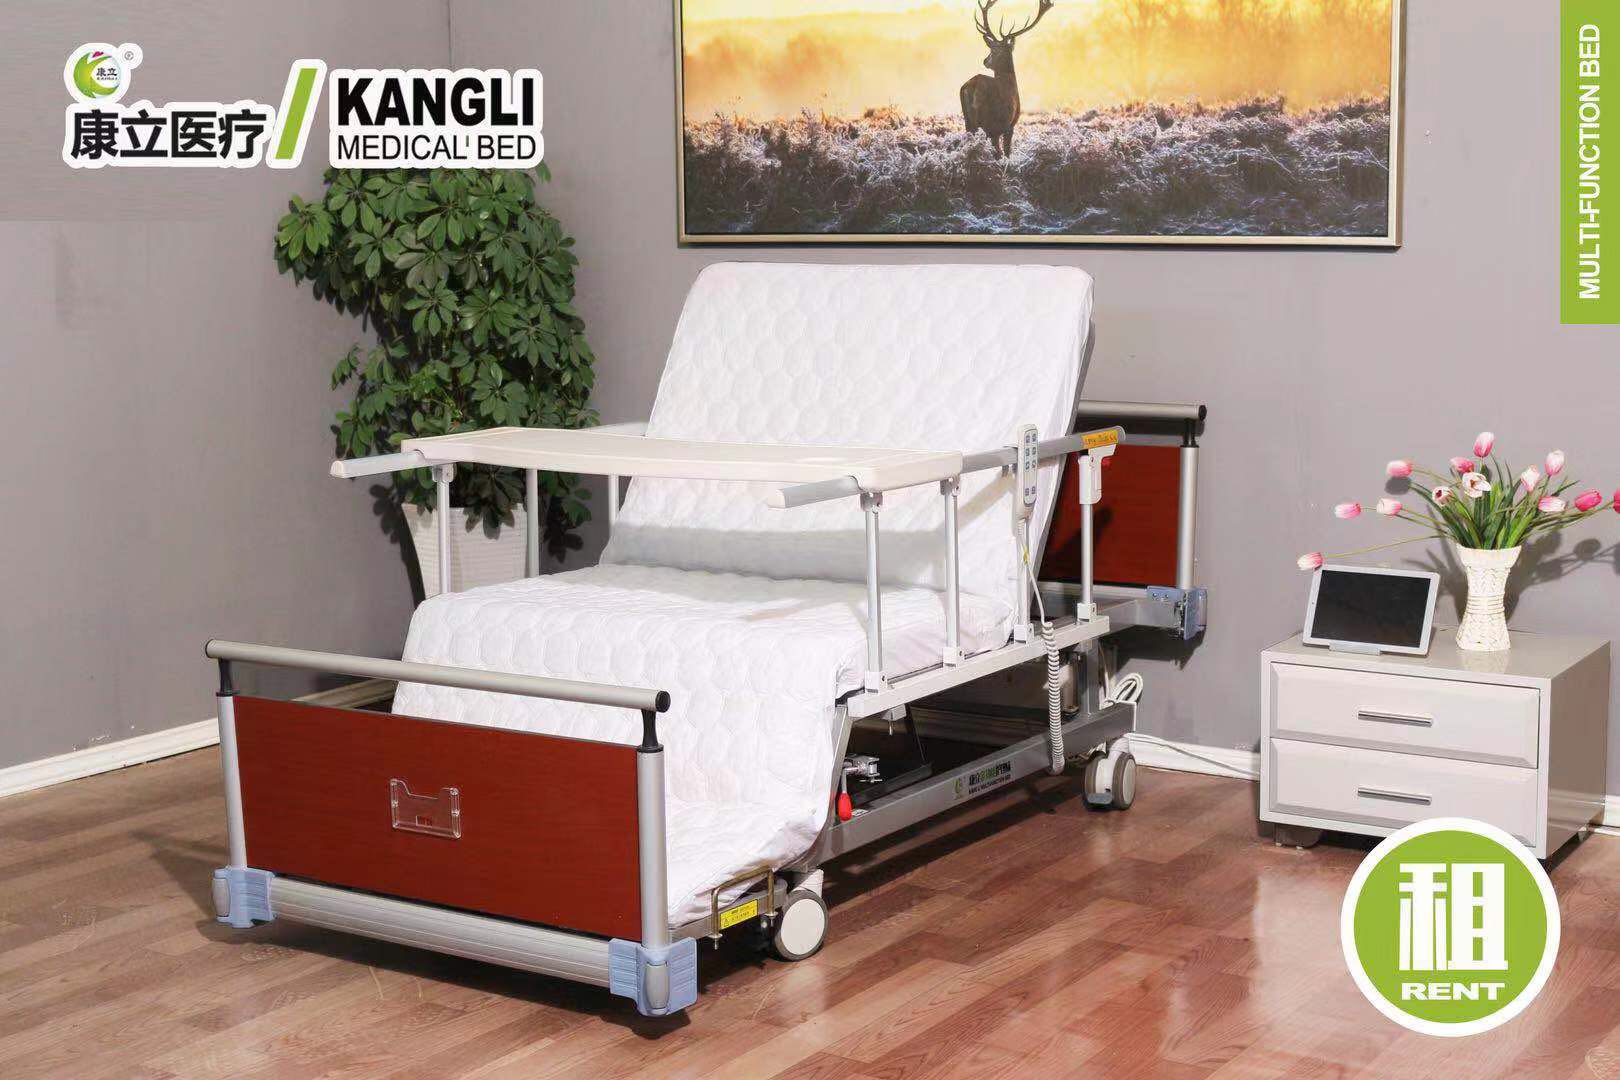 adjustable beds hospital style